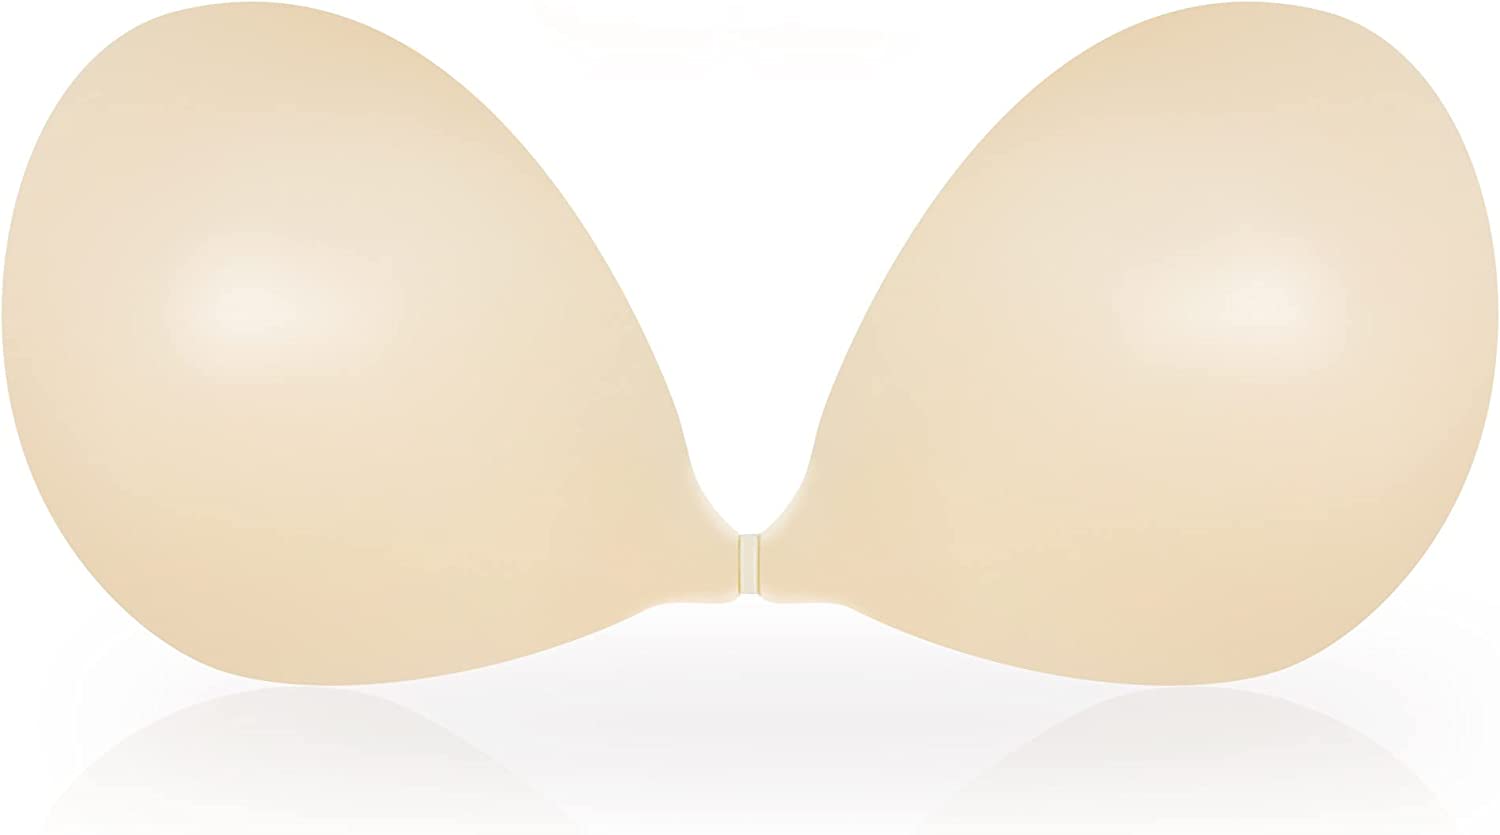 Uniquebobo Ladies Nude Silicone Bra Cup Invisible Bra - China Bra Cup and  Silicone Bra Cup price